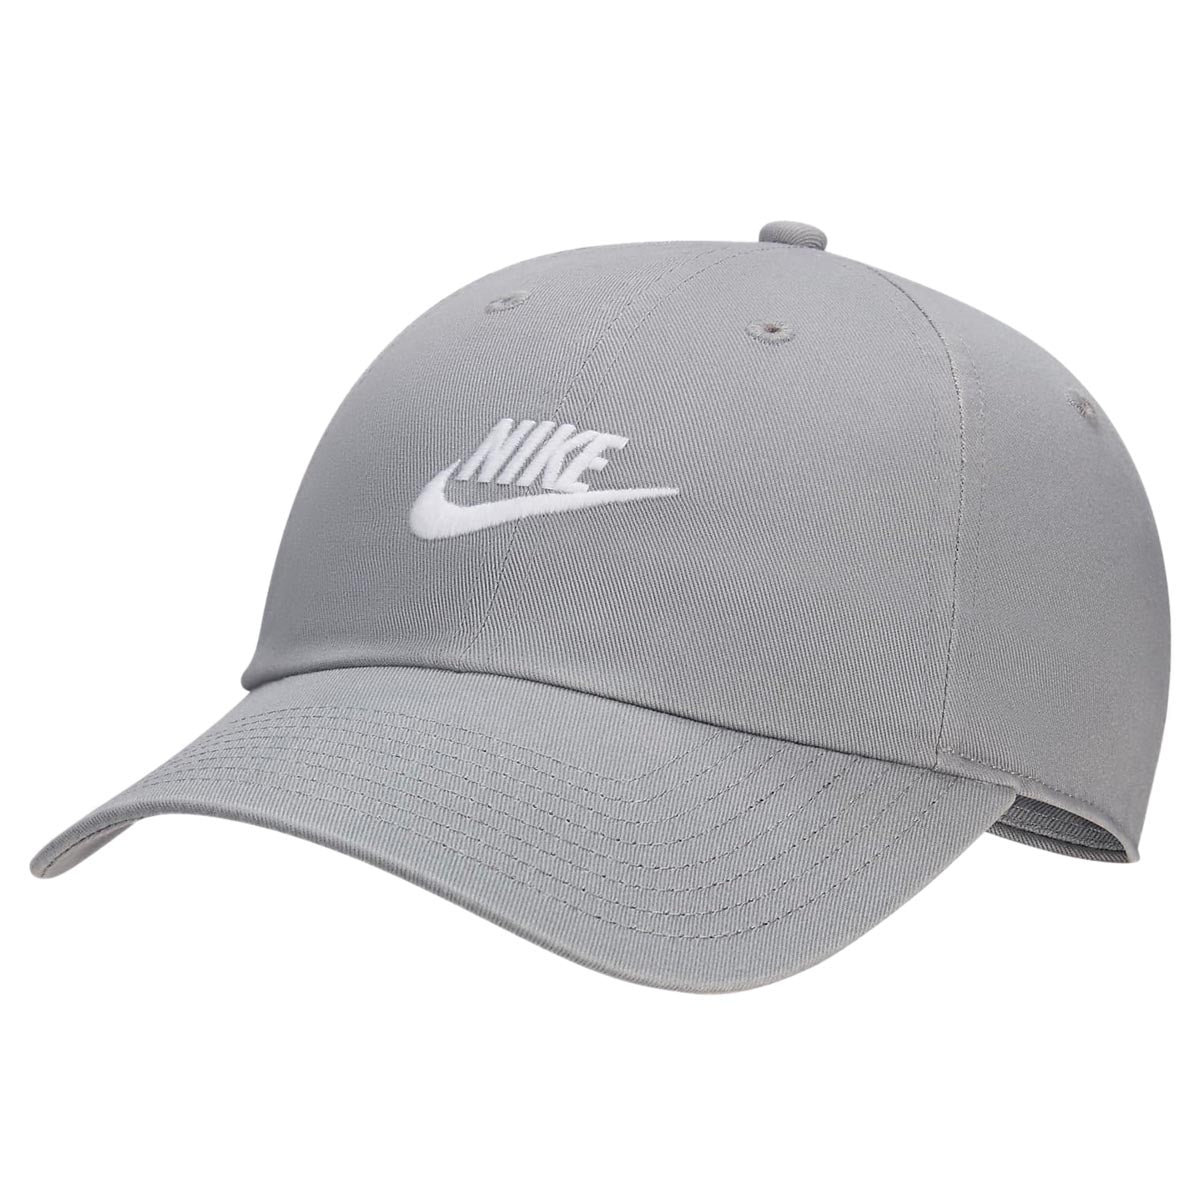 Nike SB Club Hat - Particle Grey/White image 1